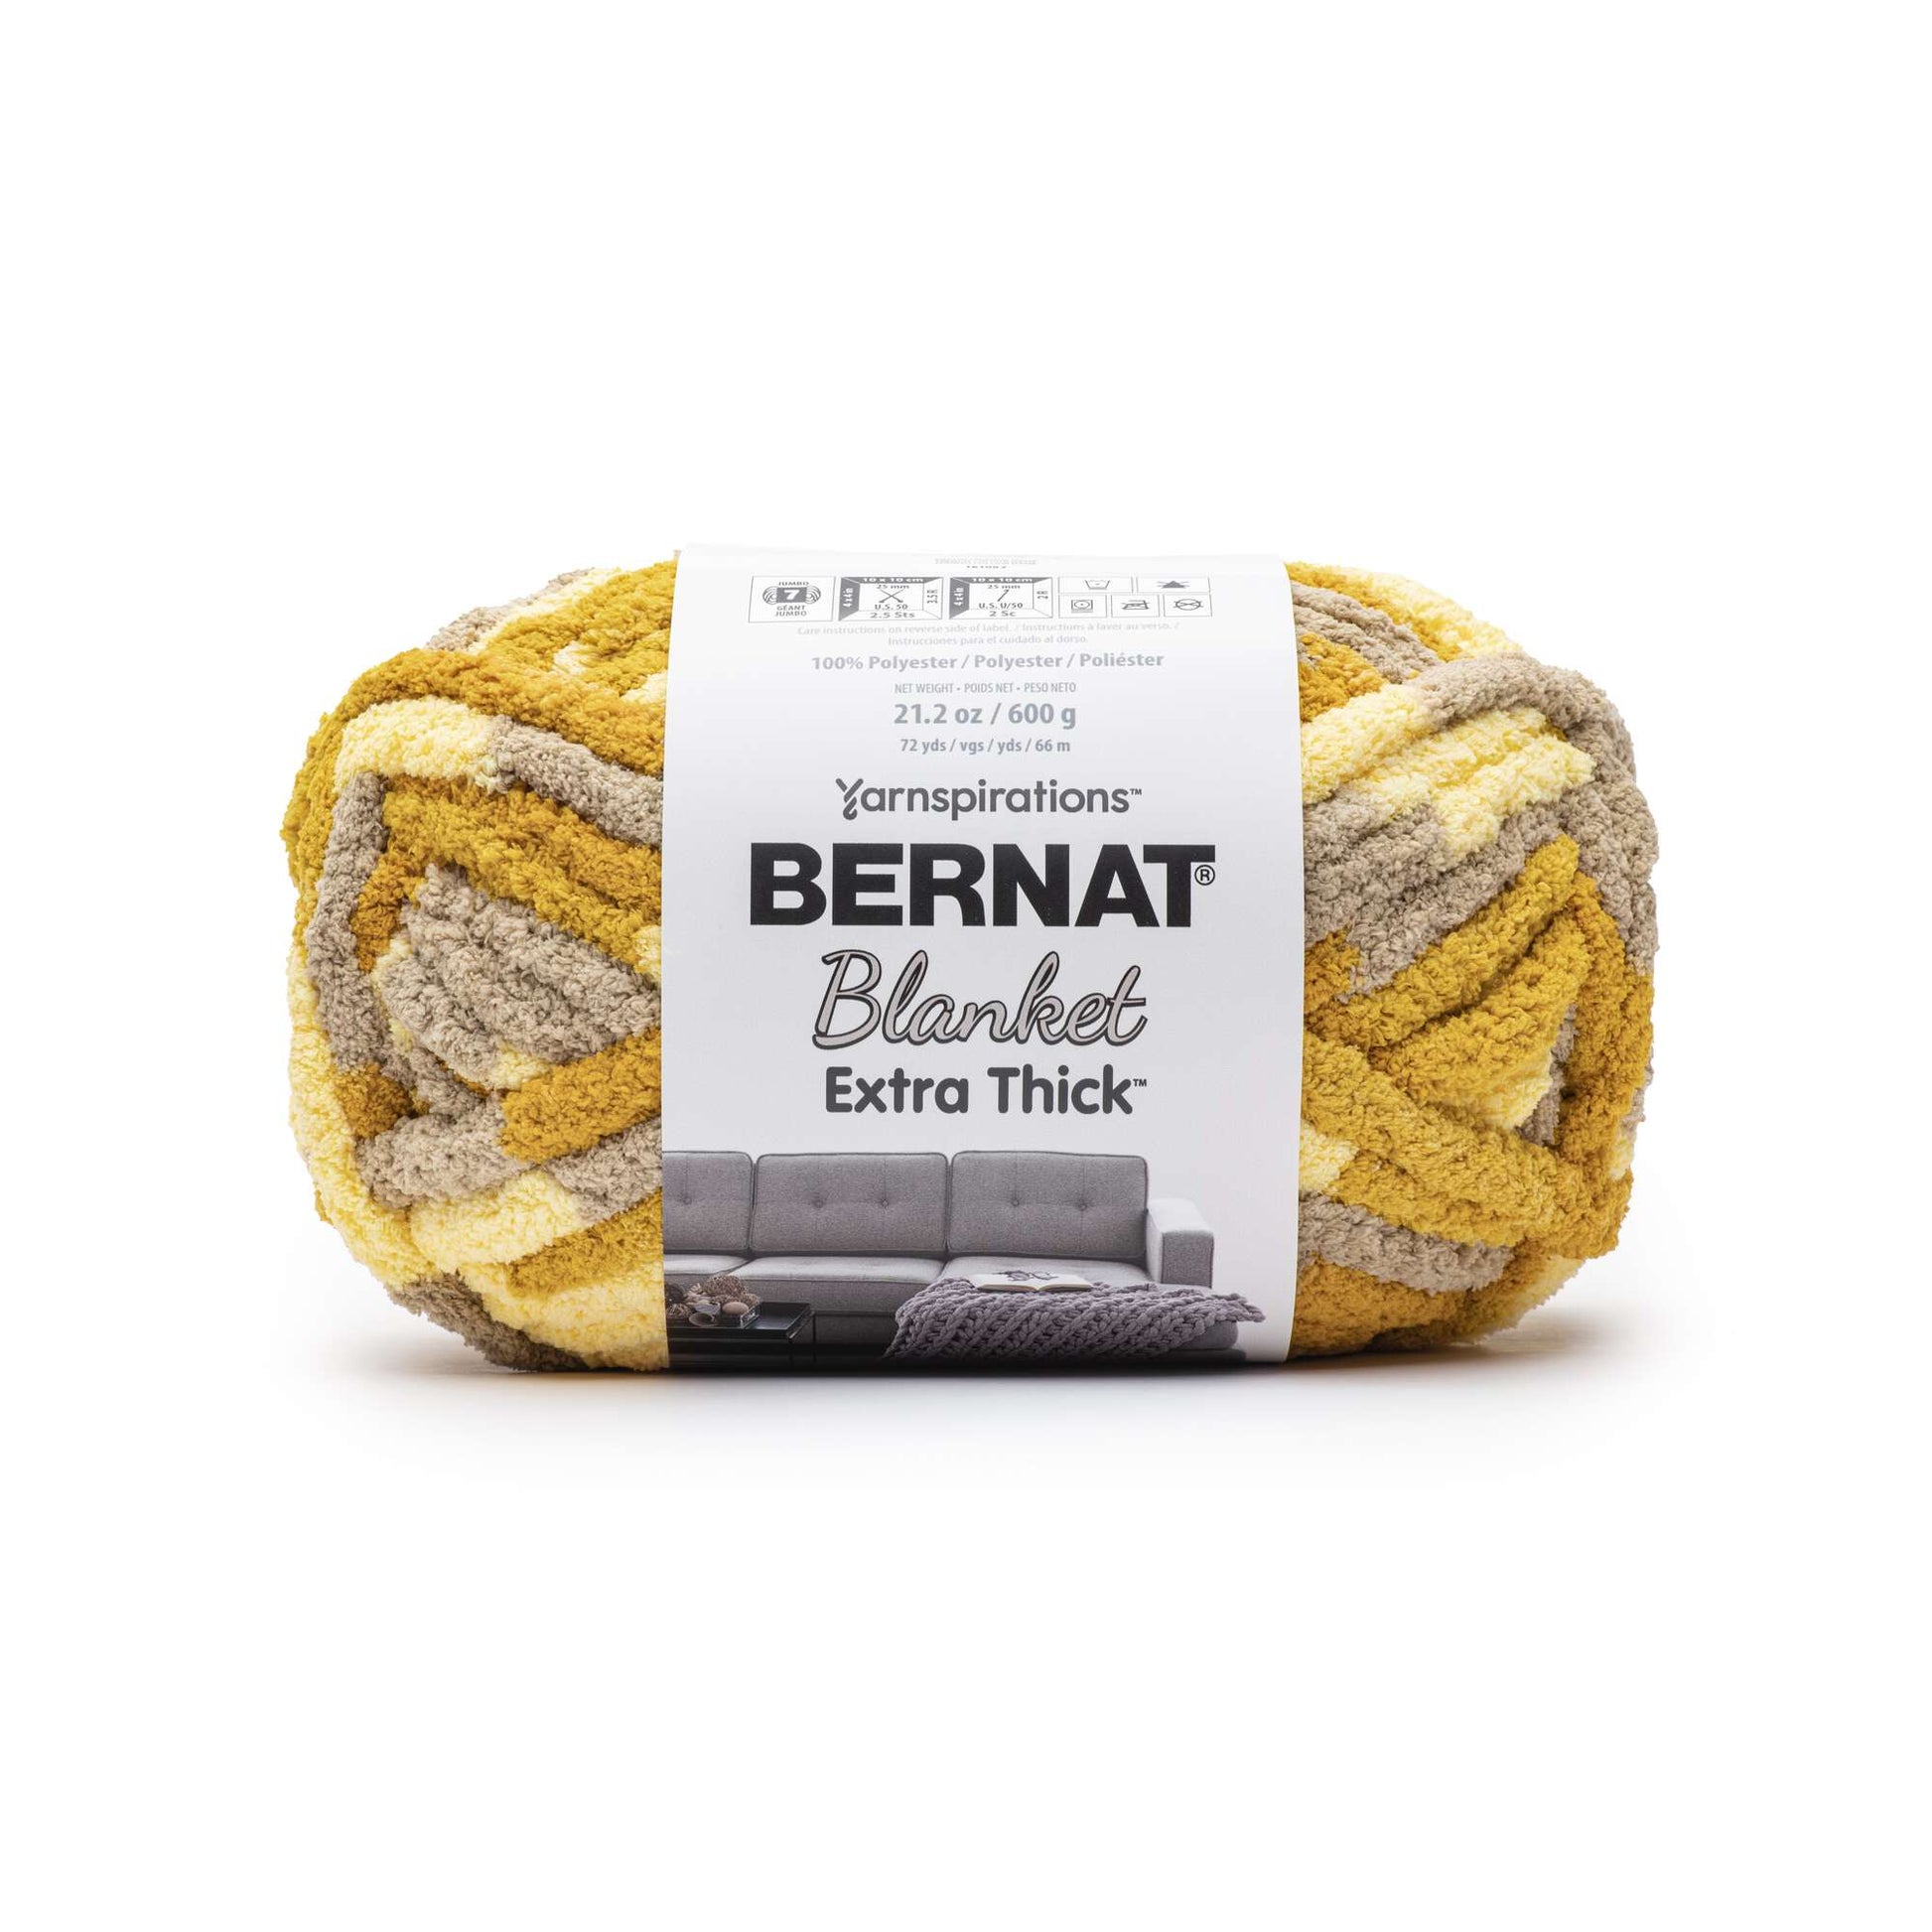 Bernat Blanket Extra Thick Yarn (600g/21.2oz) Flaxon Gold